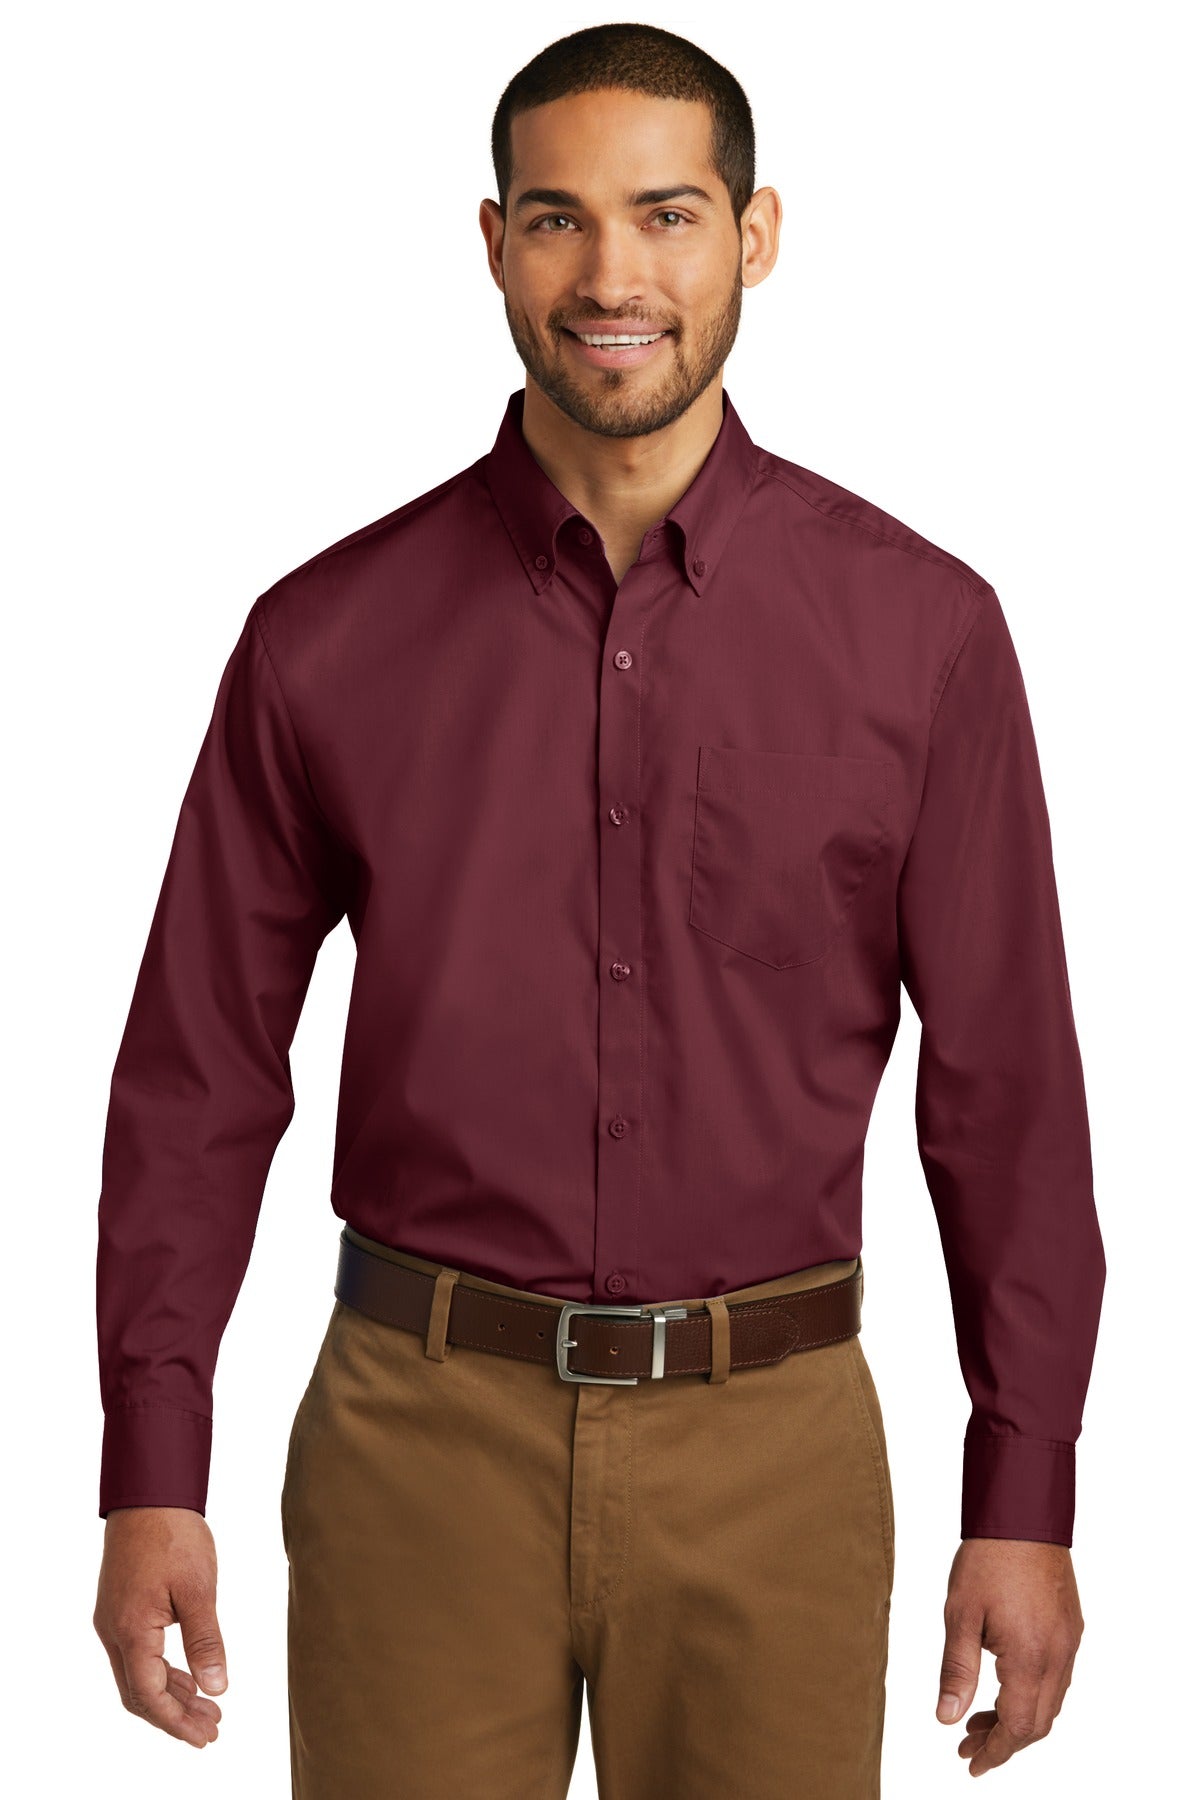 Port Authority® Long Sleeve Carefree Poplin Shirt. W100 [Burgundy] - DFW Impression